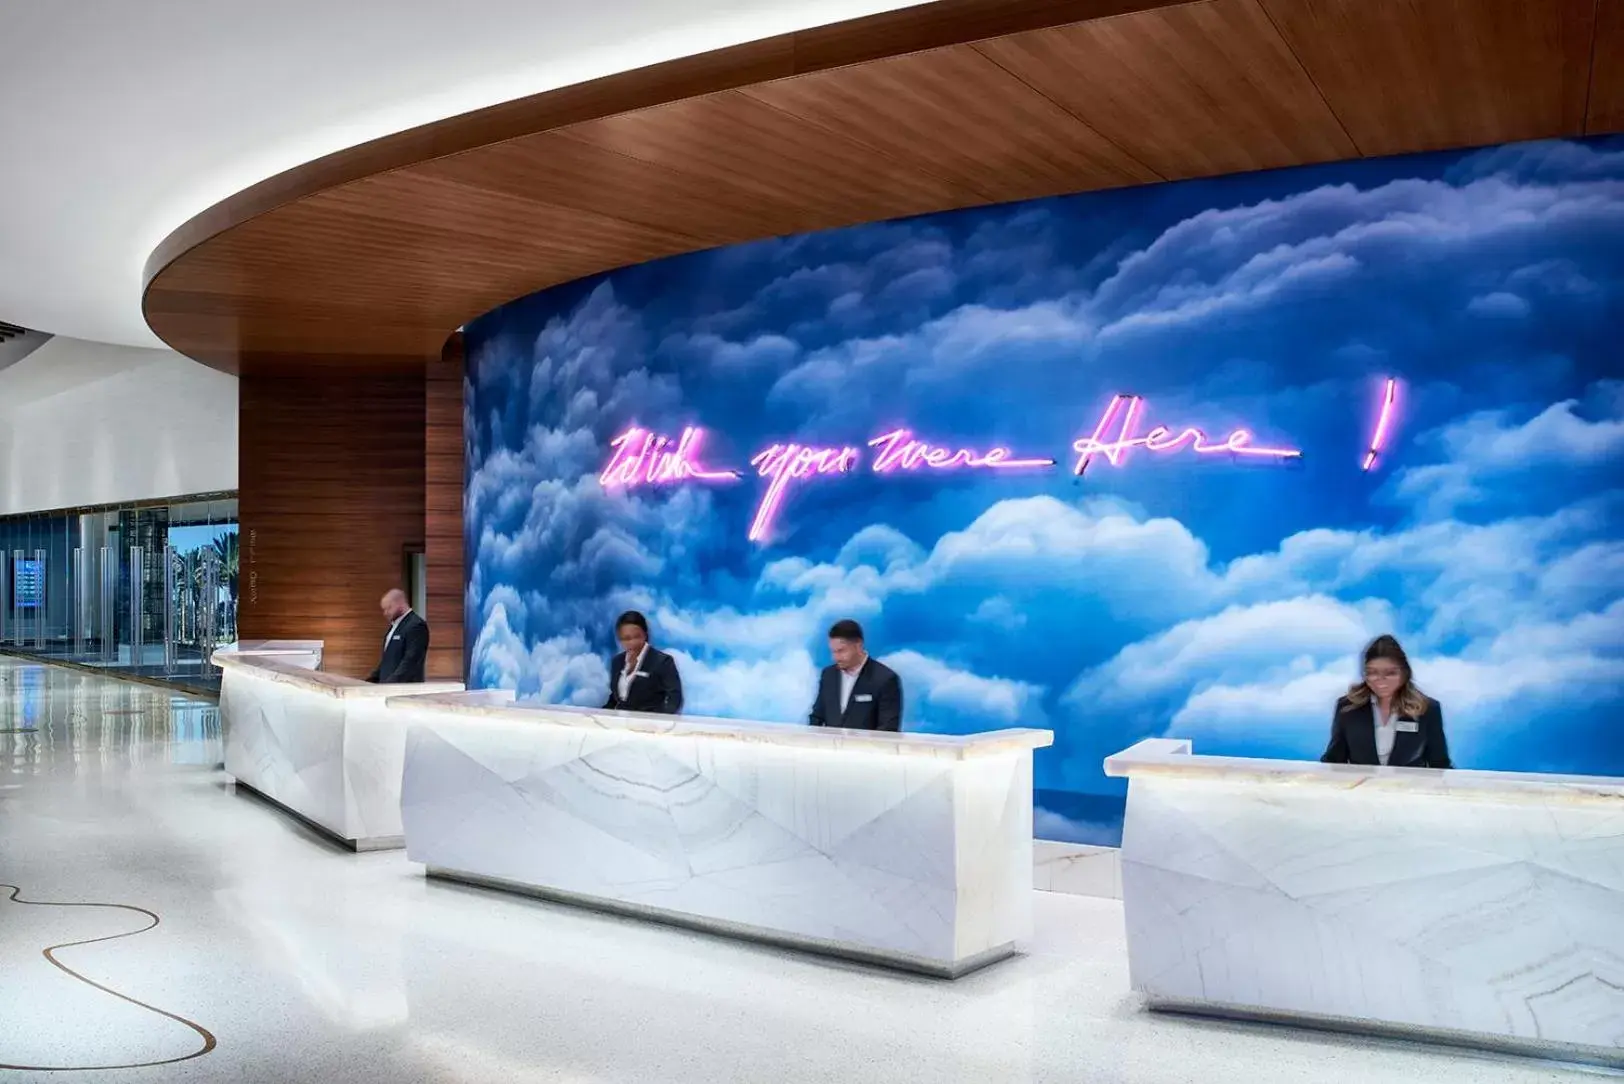 Lobby or reception in Palms Casino Resort